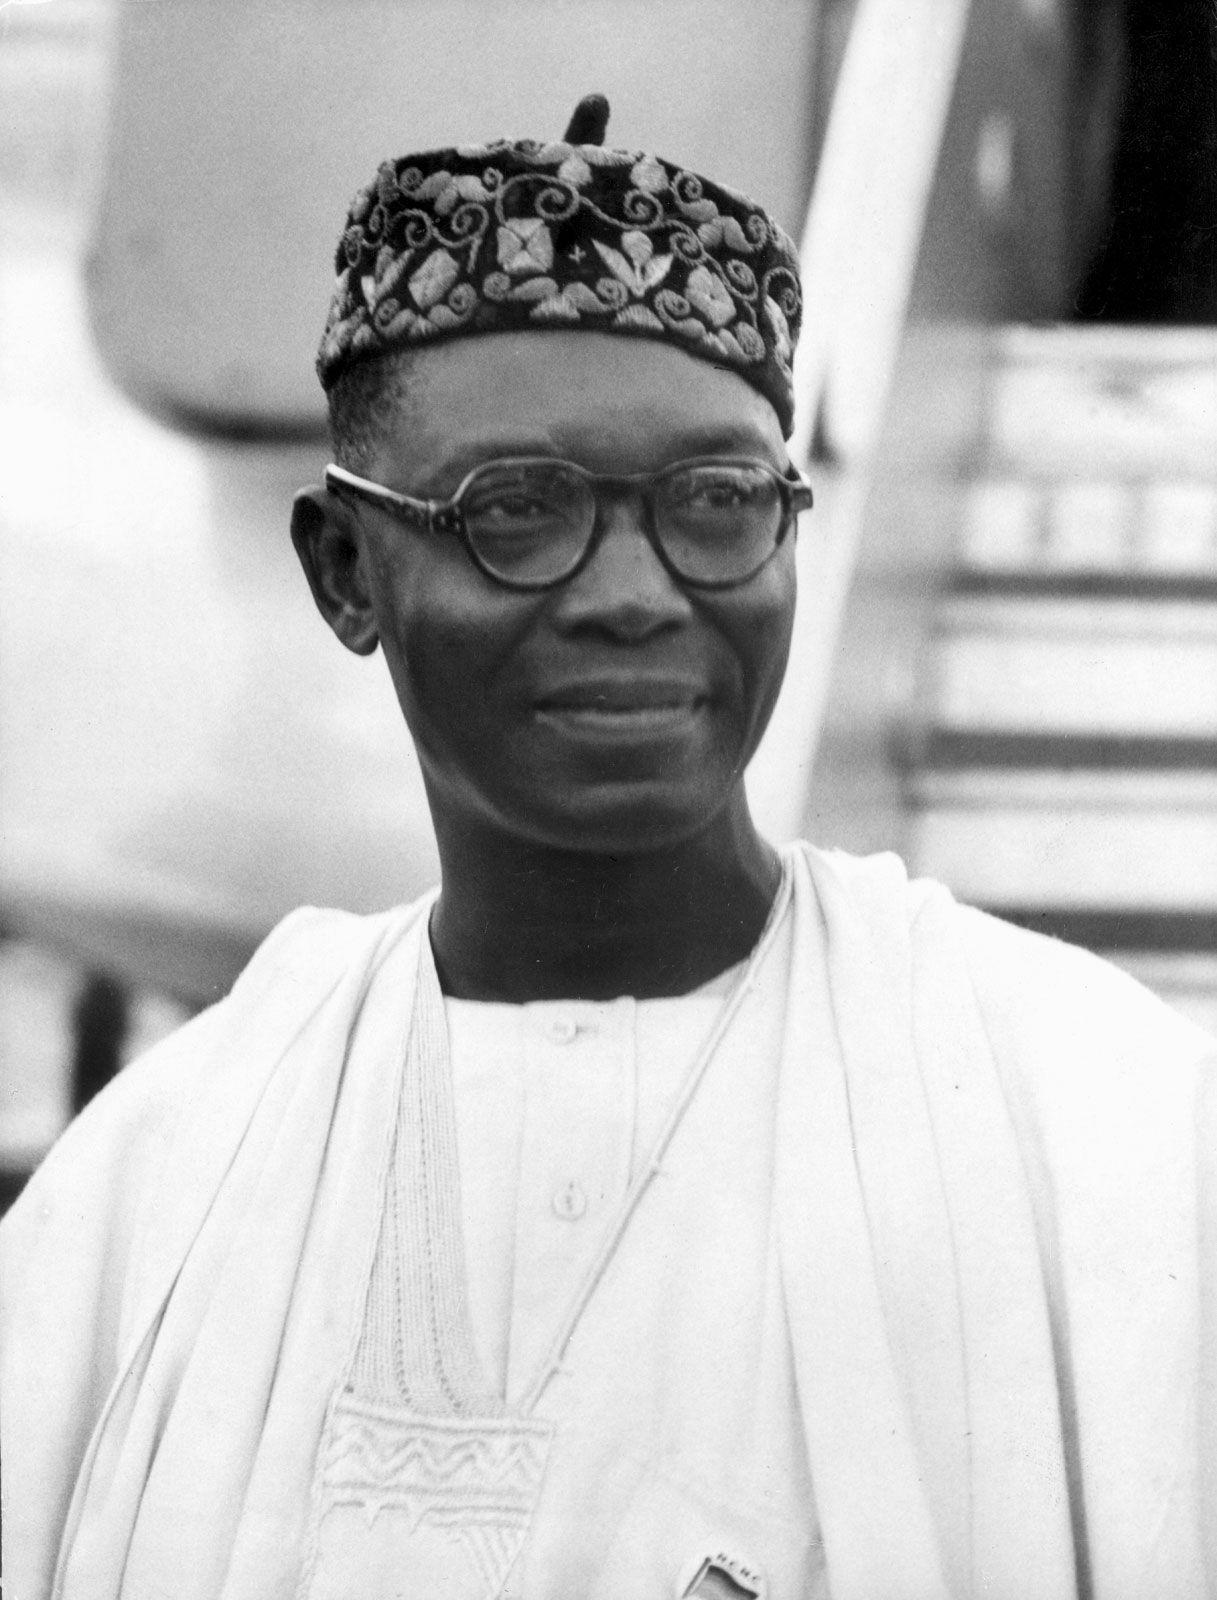 Past Presidents of Nigeria